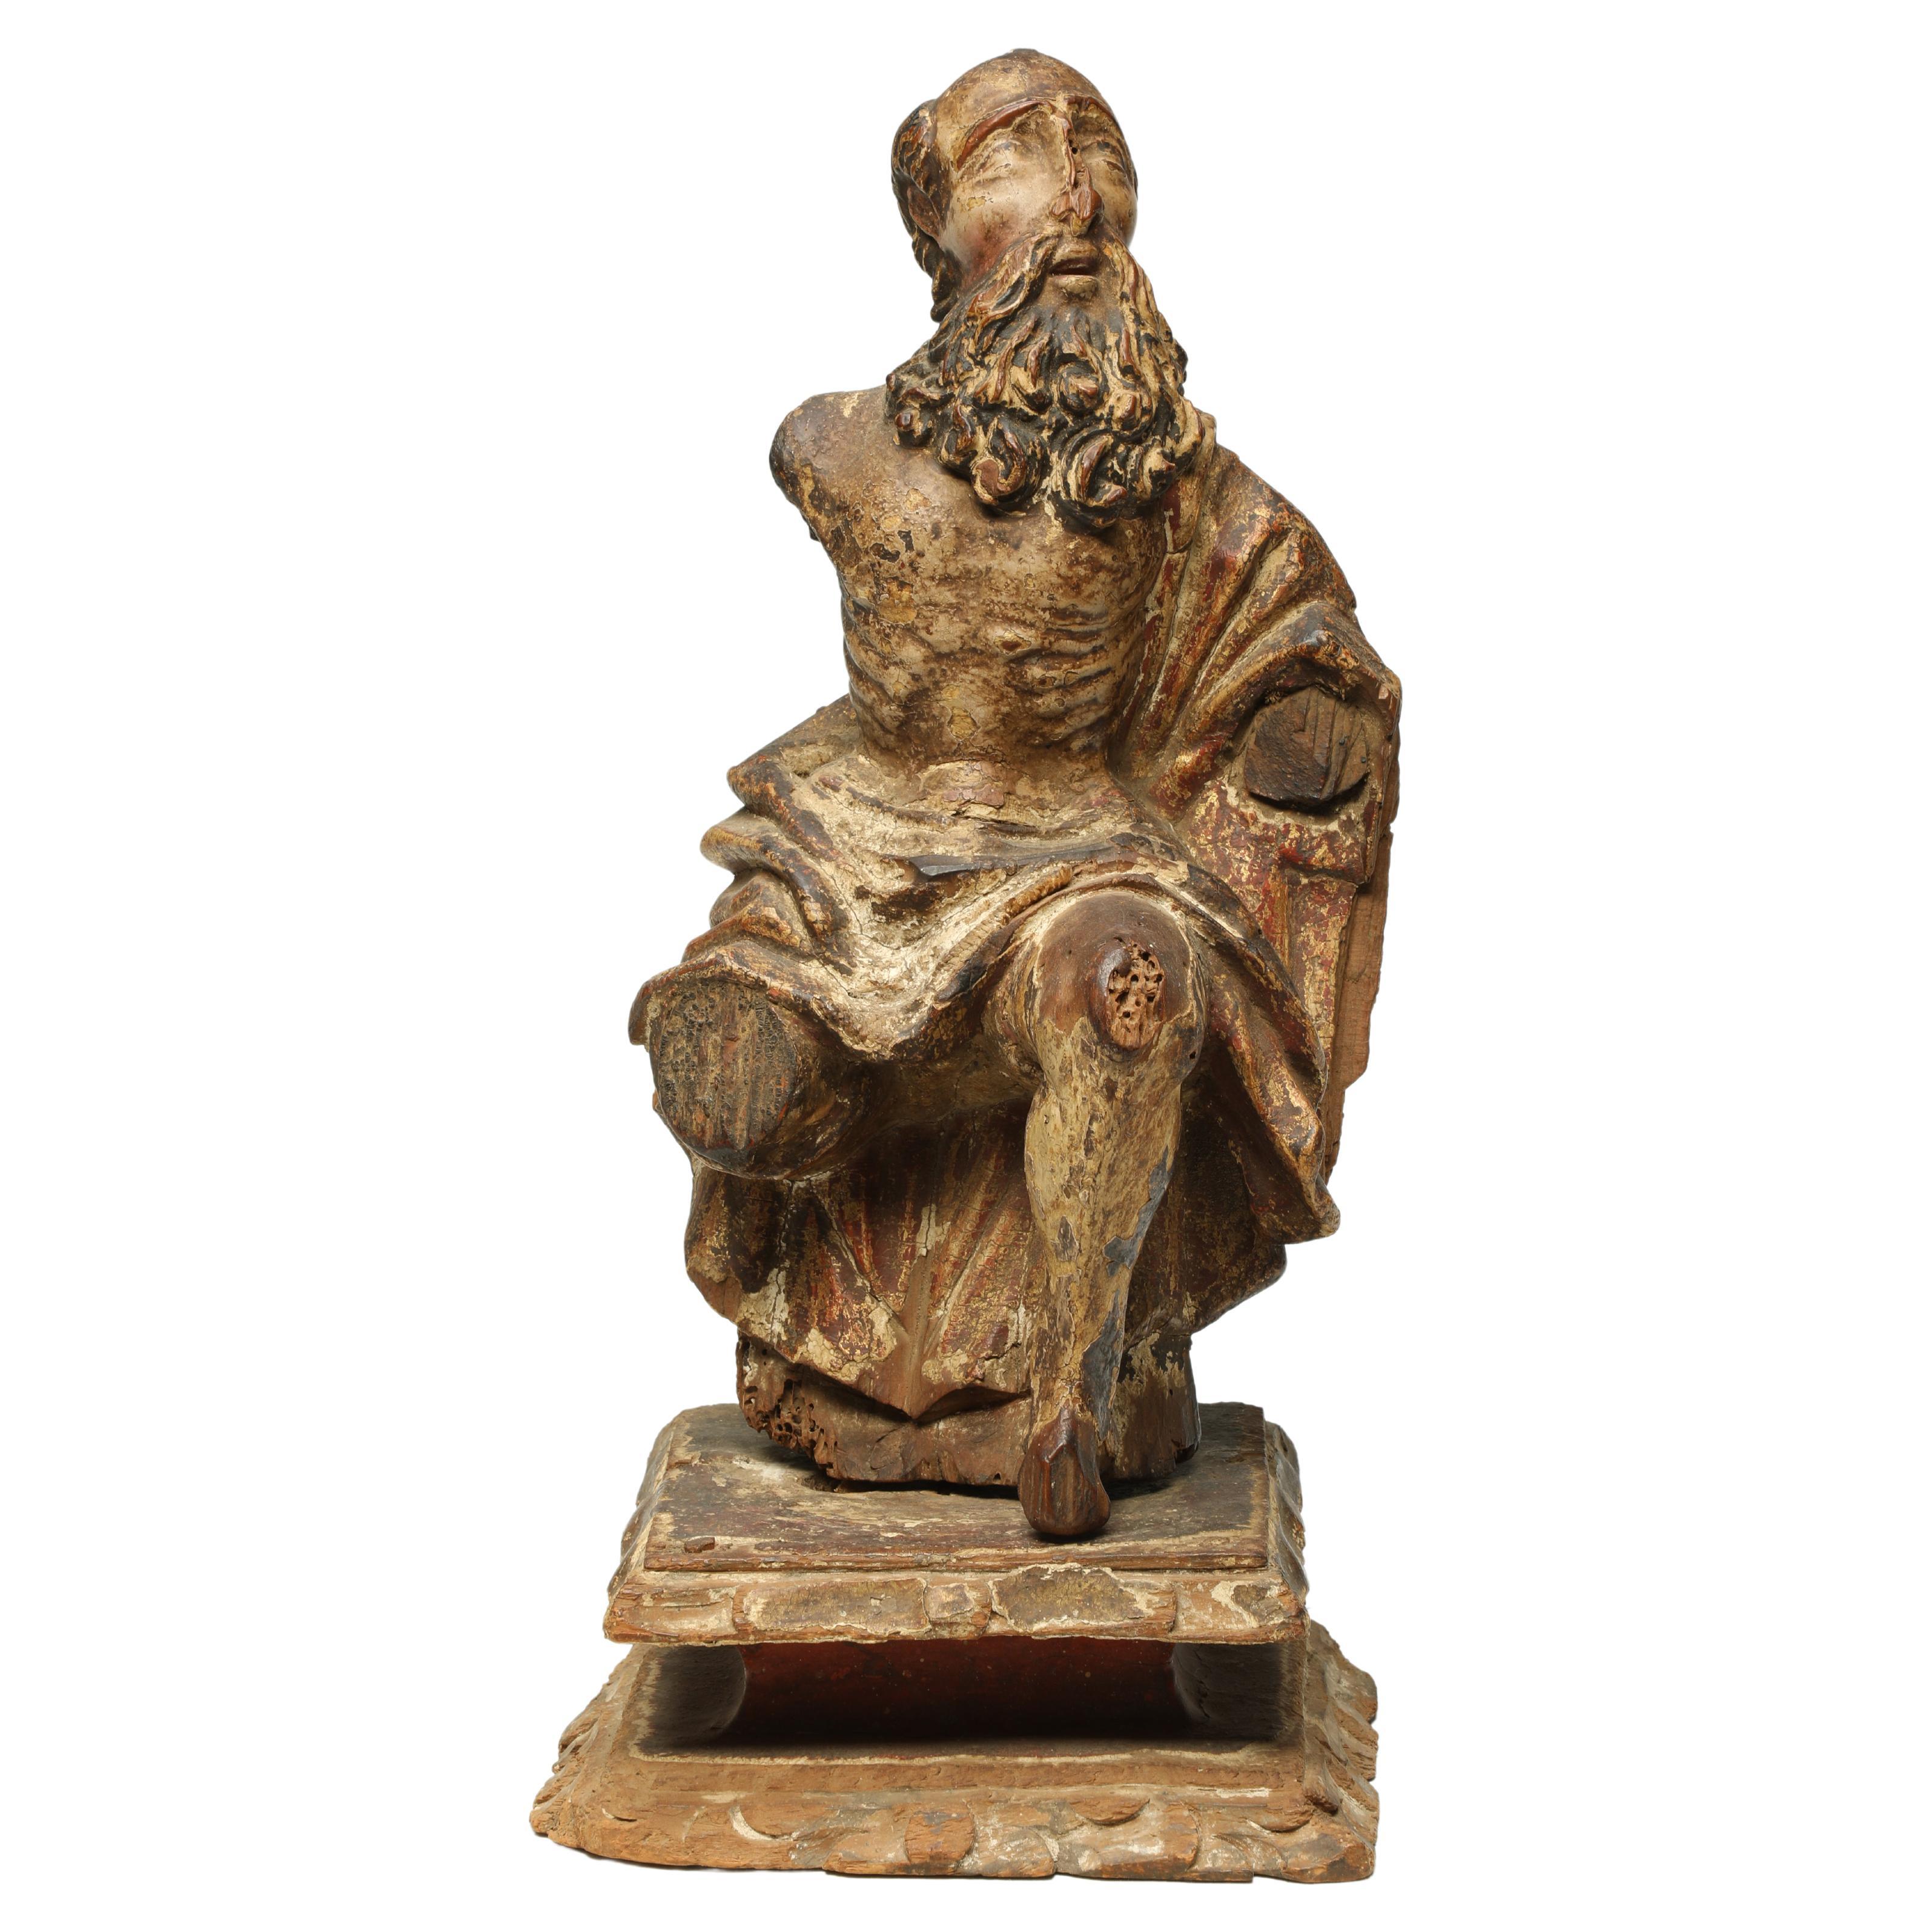 Antique 17th-18th Century Wood Italian Seated Saint Figure Fragment with Beard